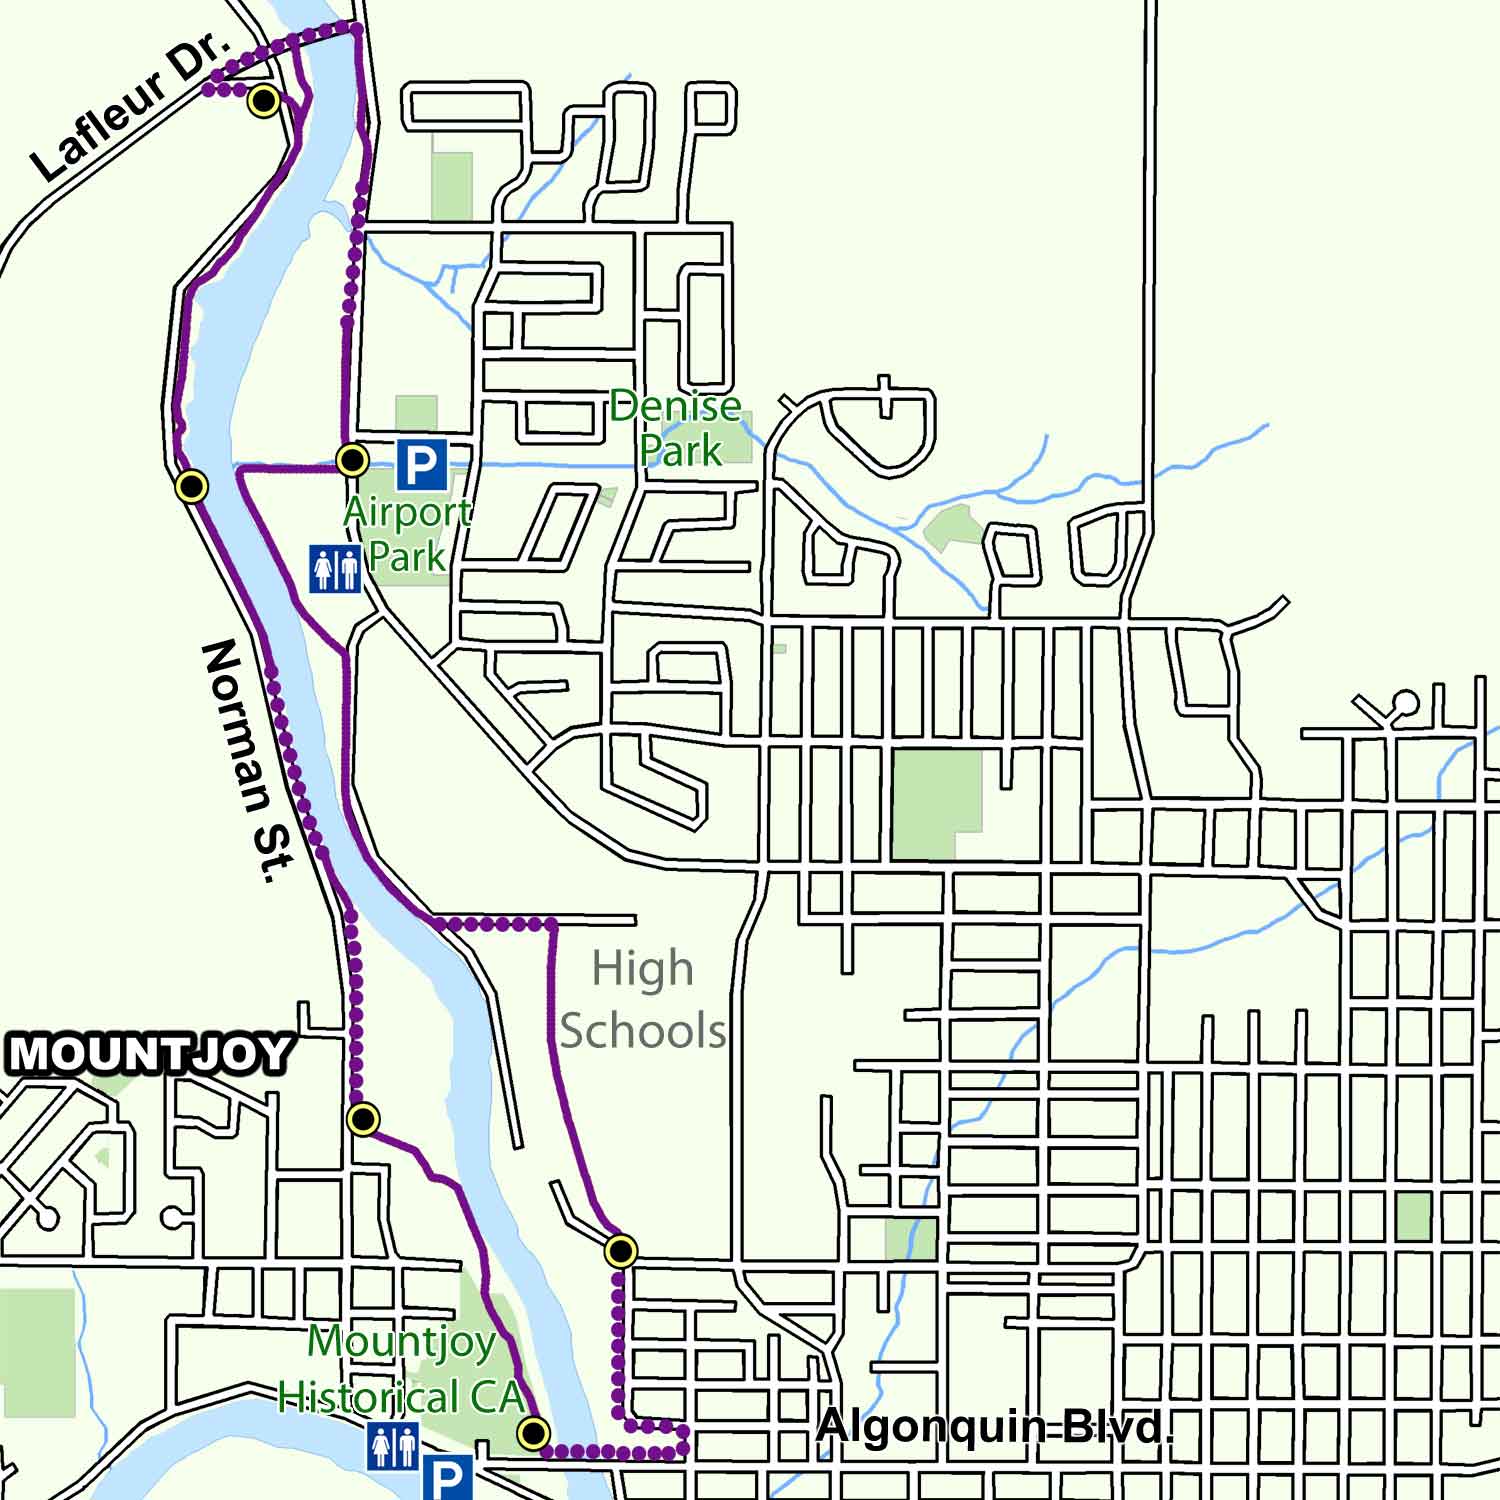 Map of the Bridge to Bridge Trail revised in 2022